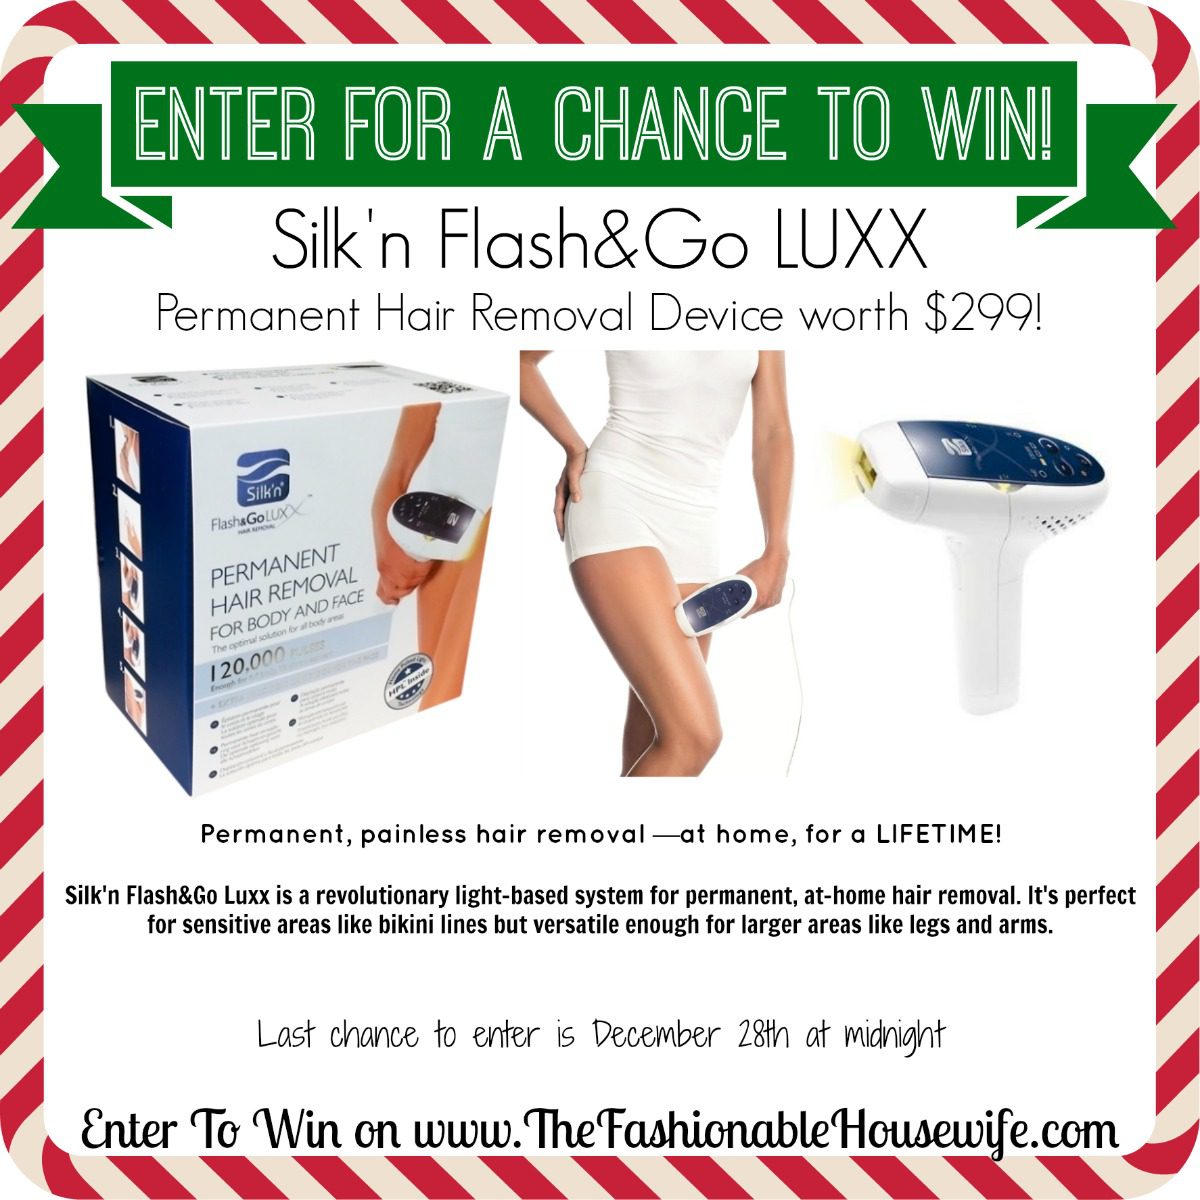 Enter for a chance to win a Silkn FlashGo Luxx